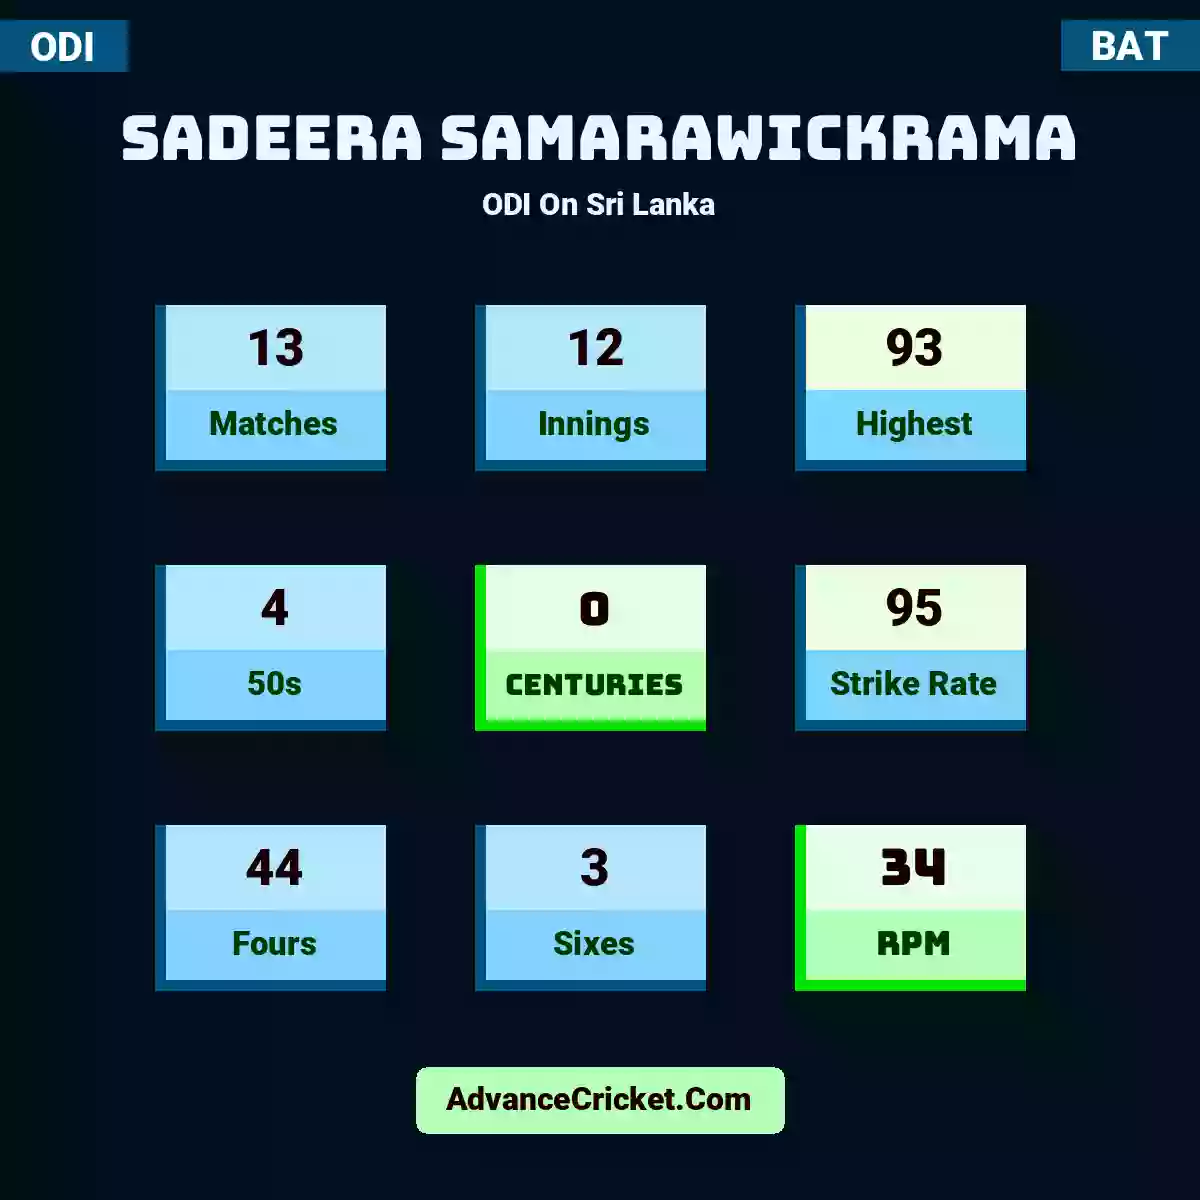 Sadeera Samarawickrama ODI  On Sri Lanka, Sadeera Samarawickrama played 13 matches, scored 93 runs as highest, 4 half-centuries, and 0 centuries, with a strike rate of 95. S.Samarawickrama hit 44 fours and 3 sixes, with an RPM of 34.